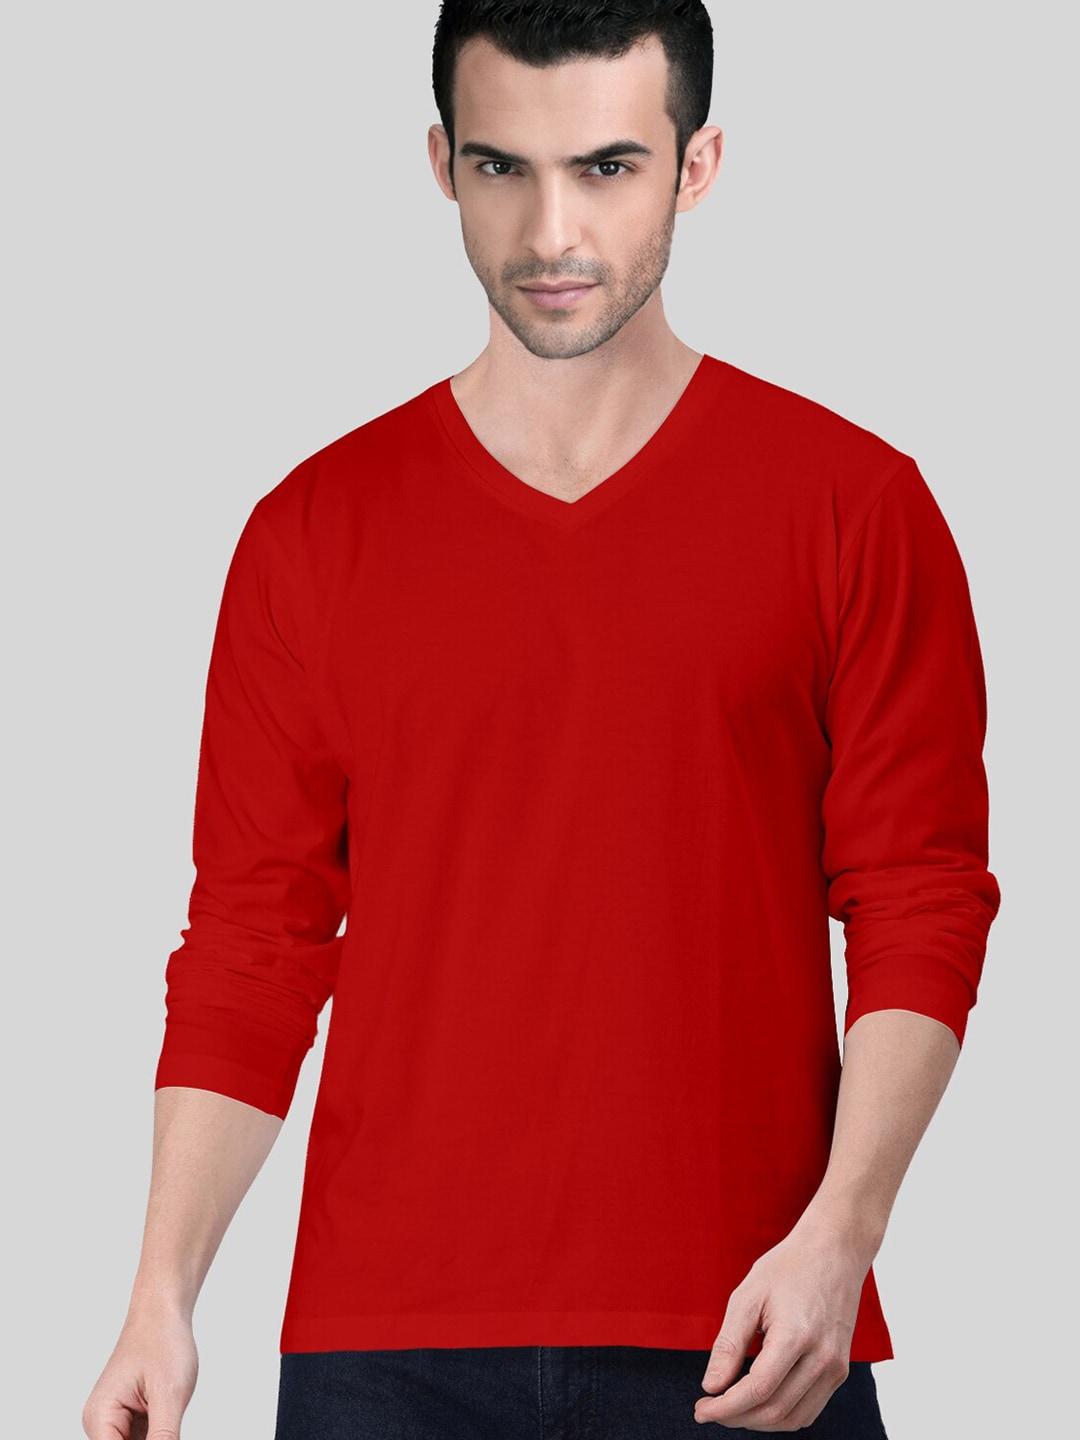 pootlu men red v-neck pure cotton t-shirt